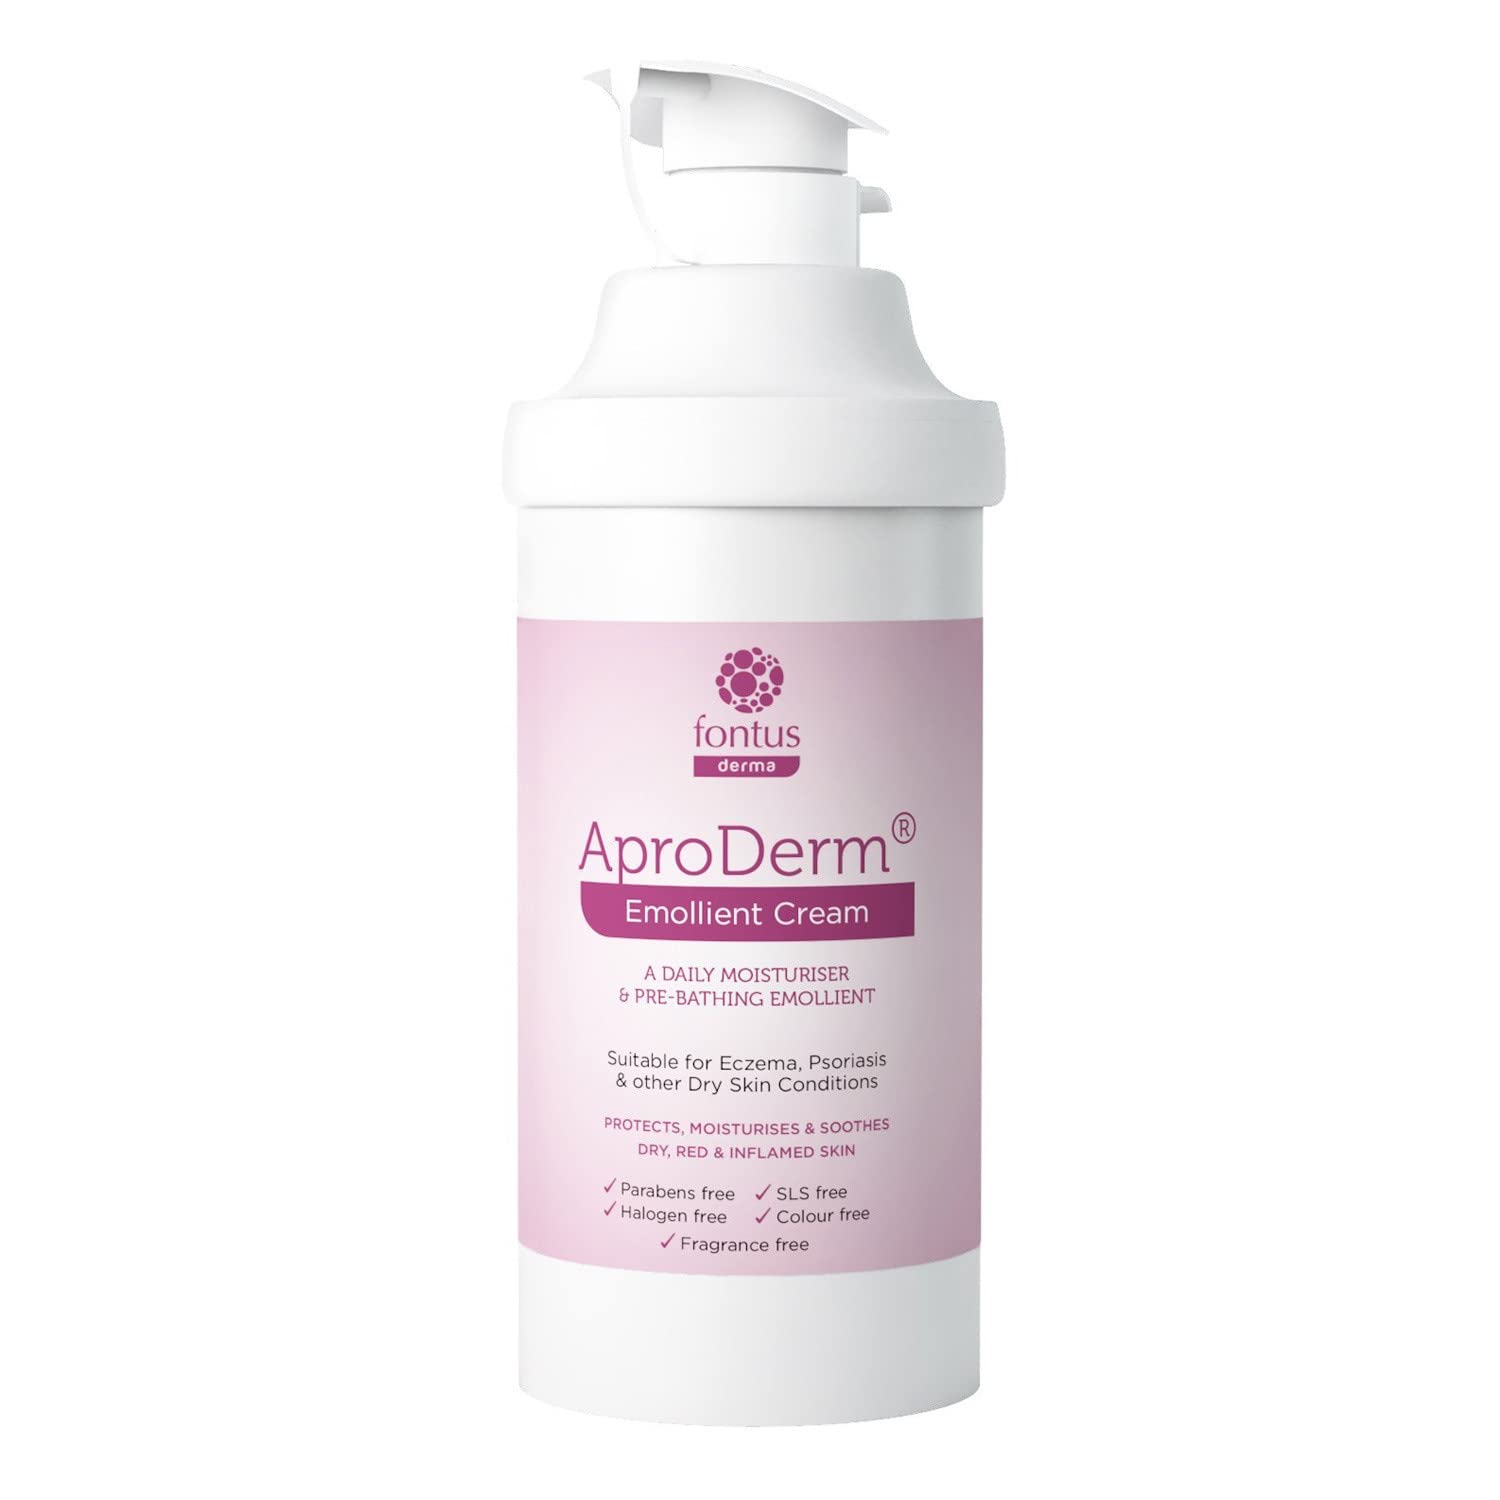 AproDerm Emollient Cream with Pump Dispenser- Suitable for Dry Skin, Dermatitis, and Eczema (500g) - Vegan